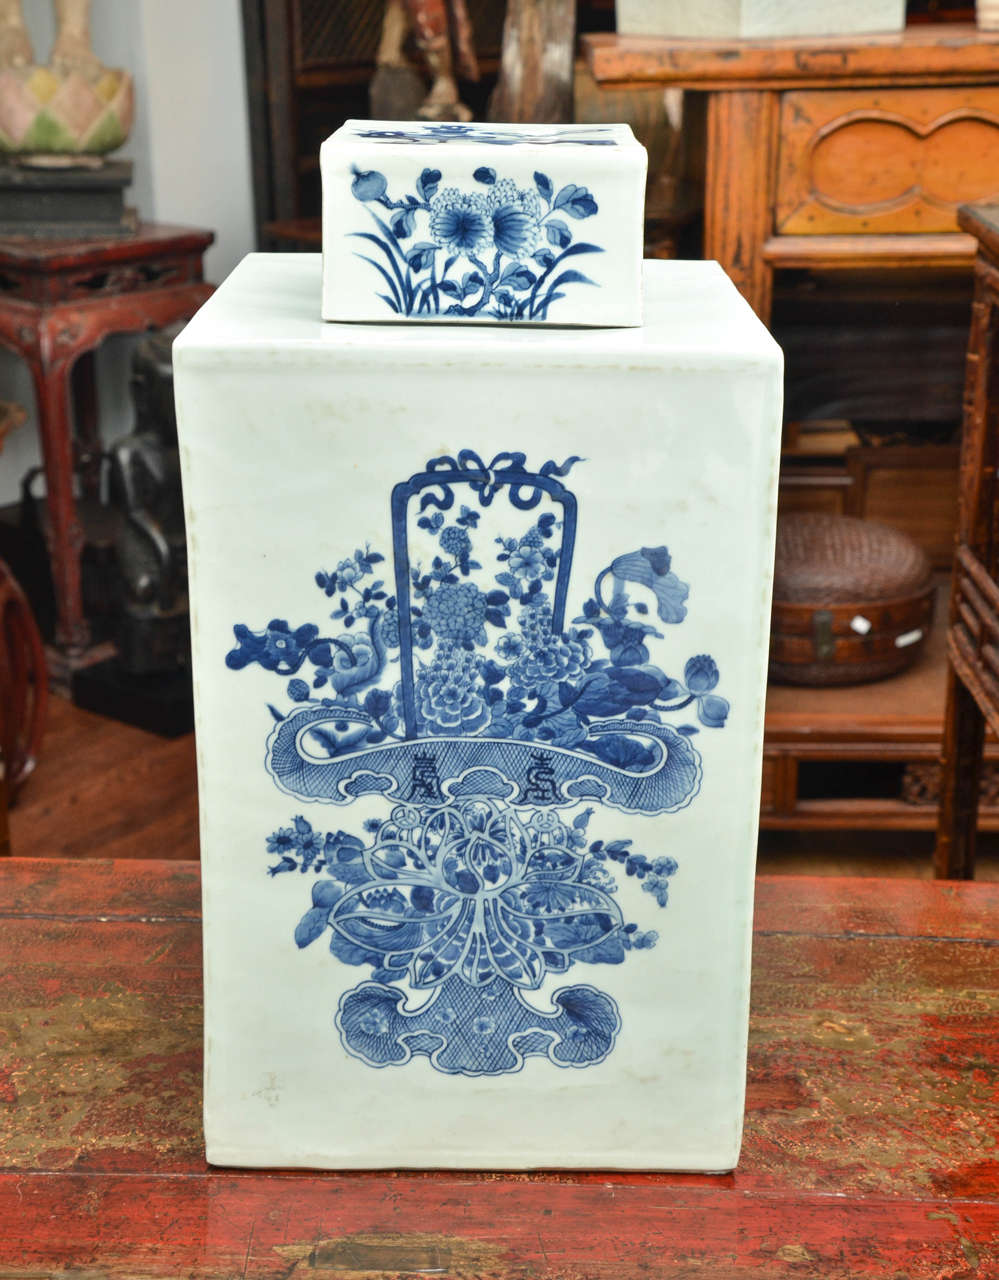 Turn of the Century Q'ing Dynasty Shanghai Blue and White Porcelain Lidded Ginger Jar